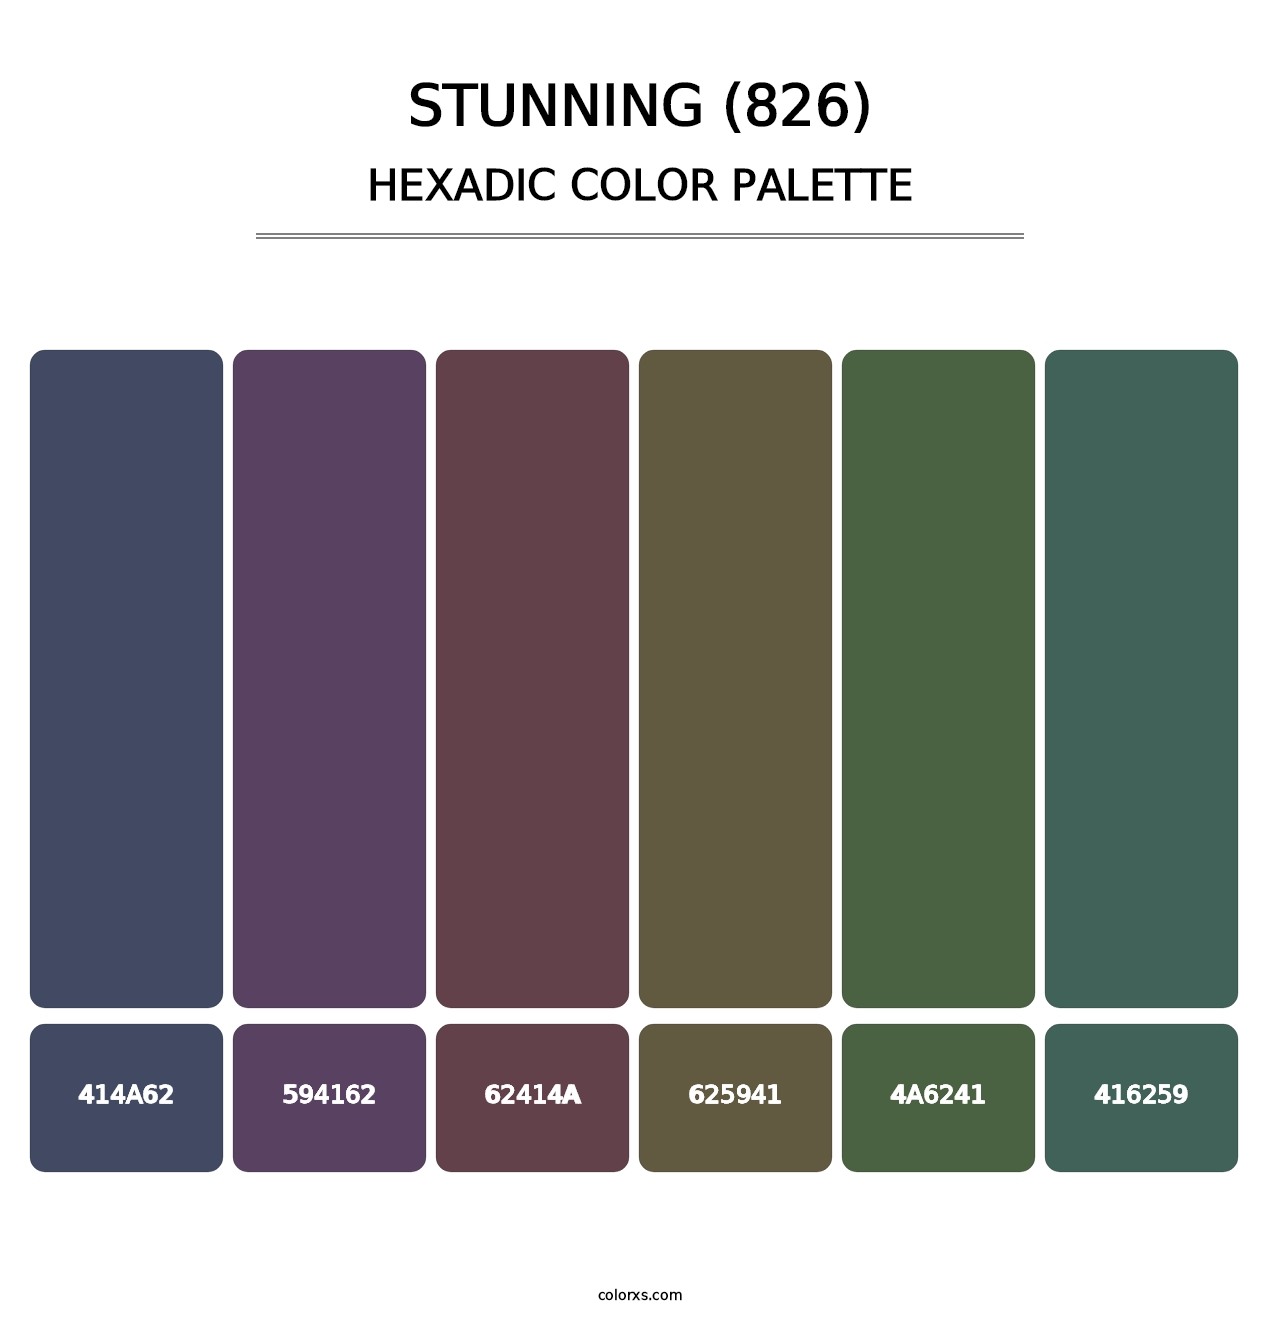 Stunning (826) - Hexadic Color Palette